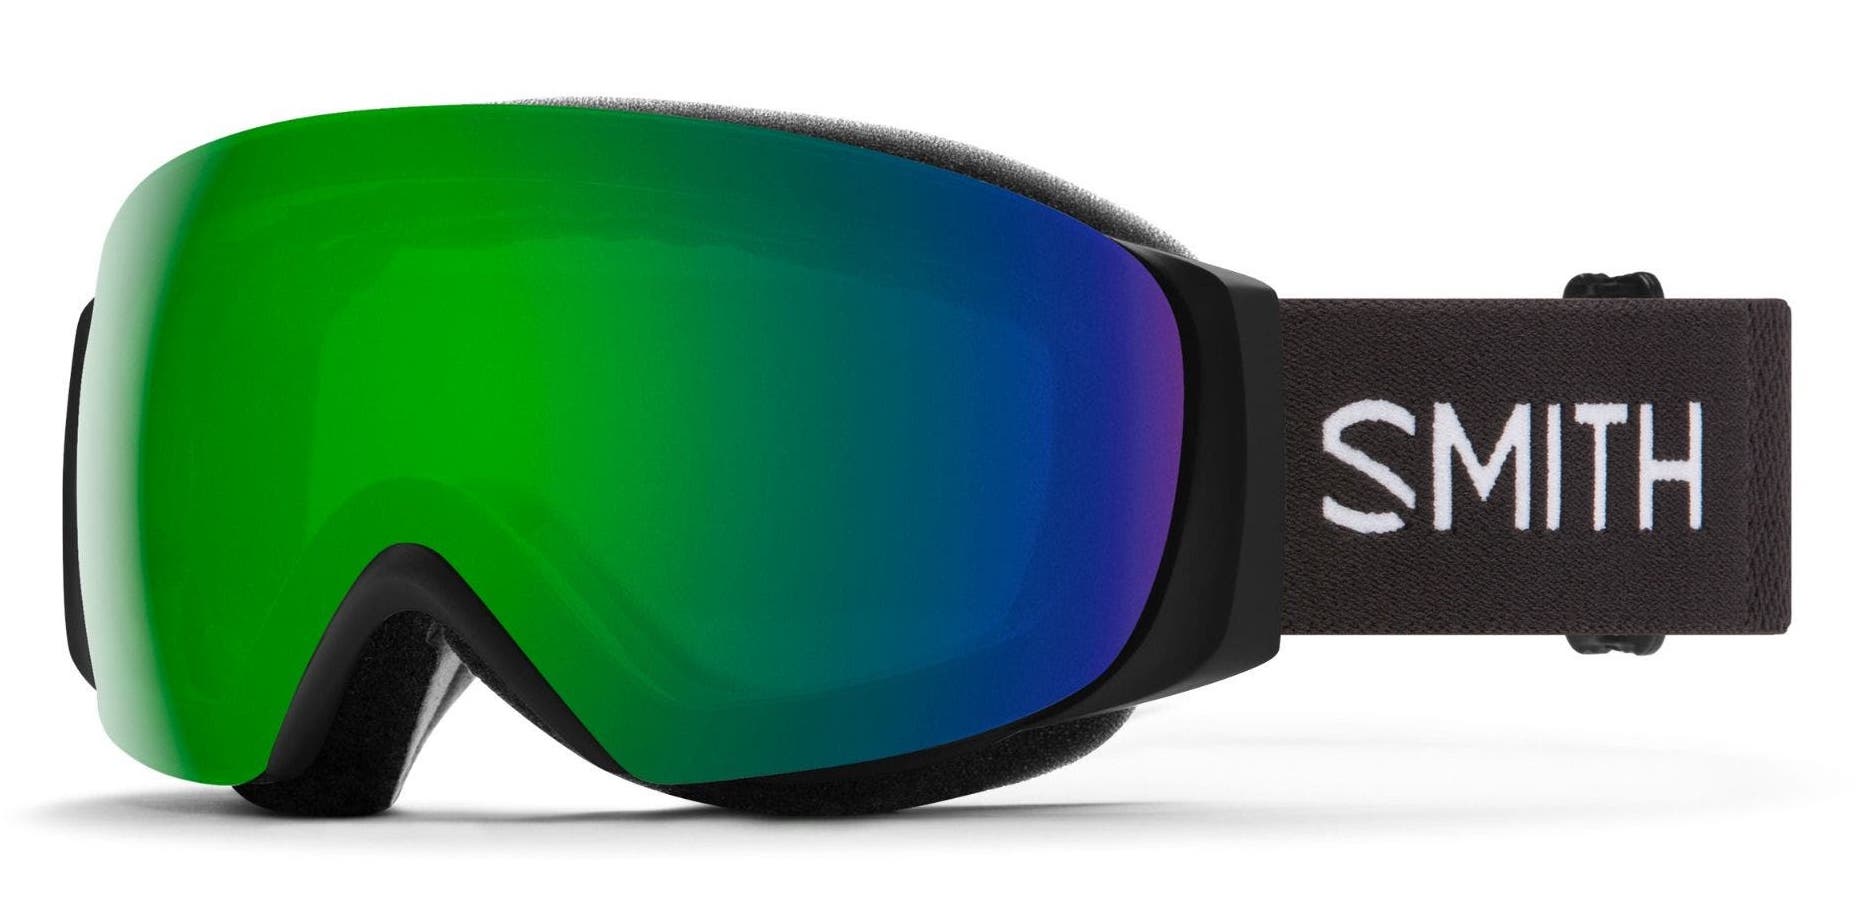 SMITH ChromaPop™ Goggle Lens Guide | SMITH Snow Goggles | SportRx